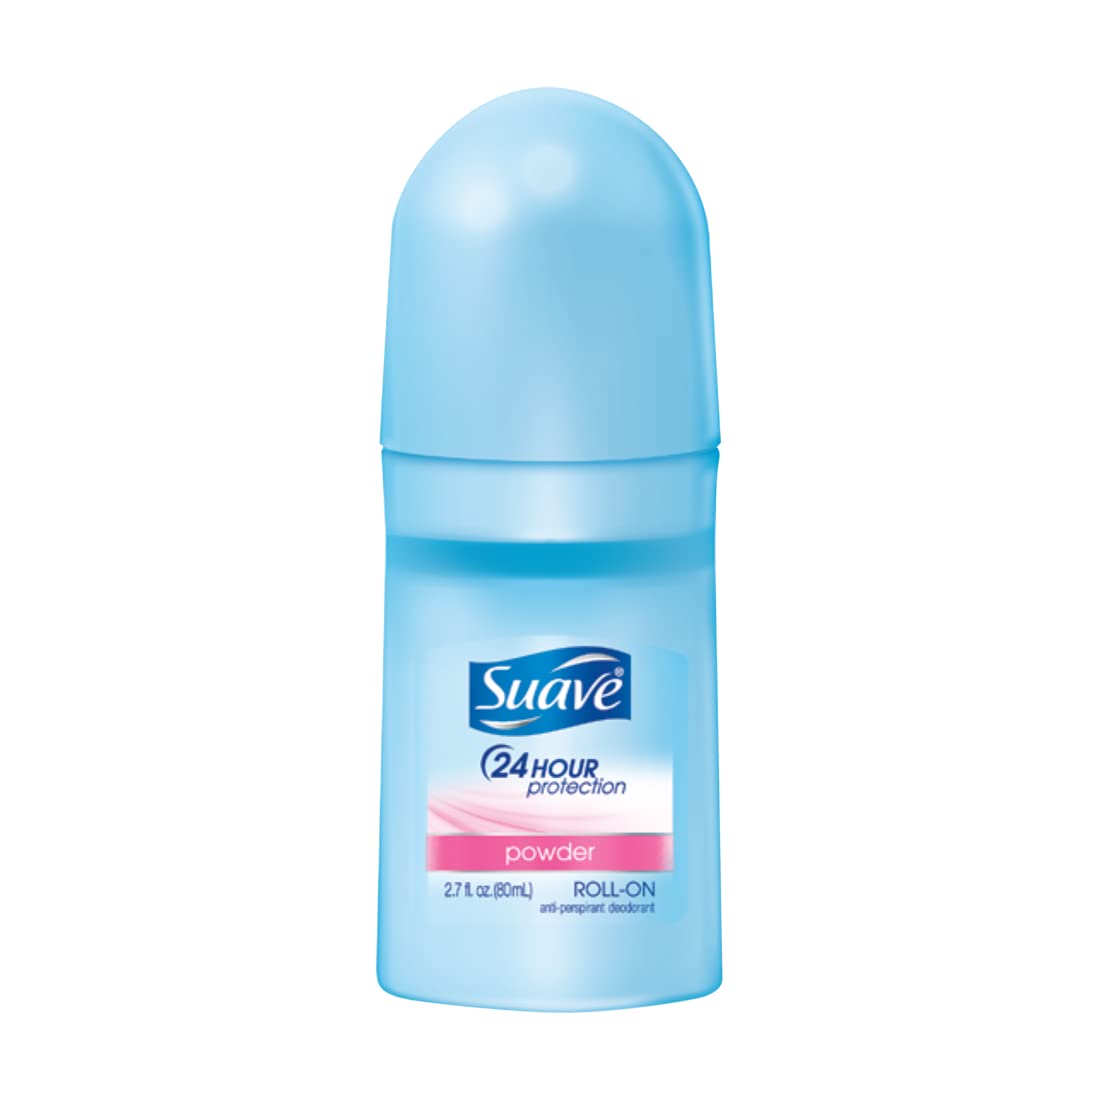 Suave Powder Roll-On Deodorant, 2.7 oz (Image May Vary)